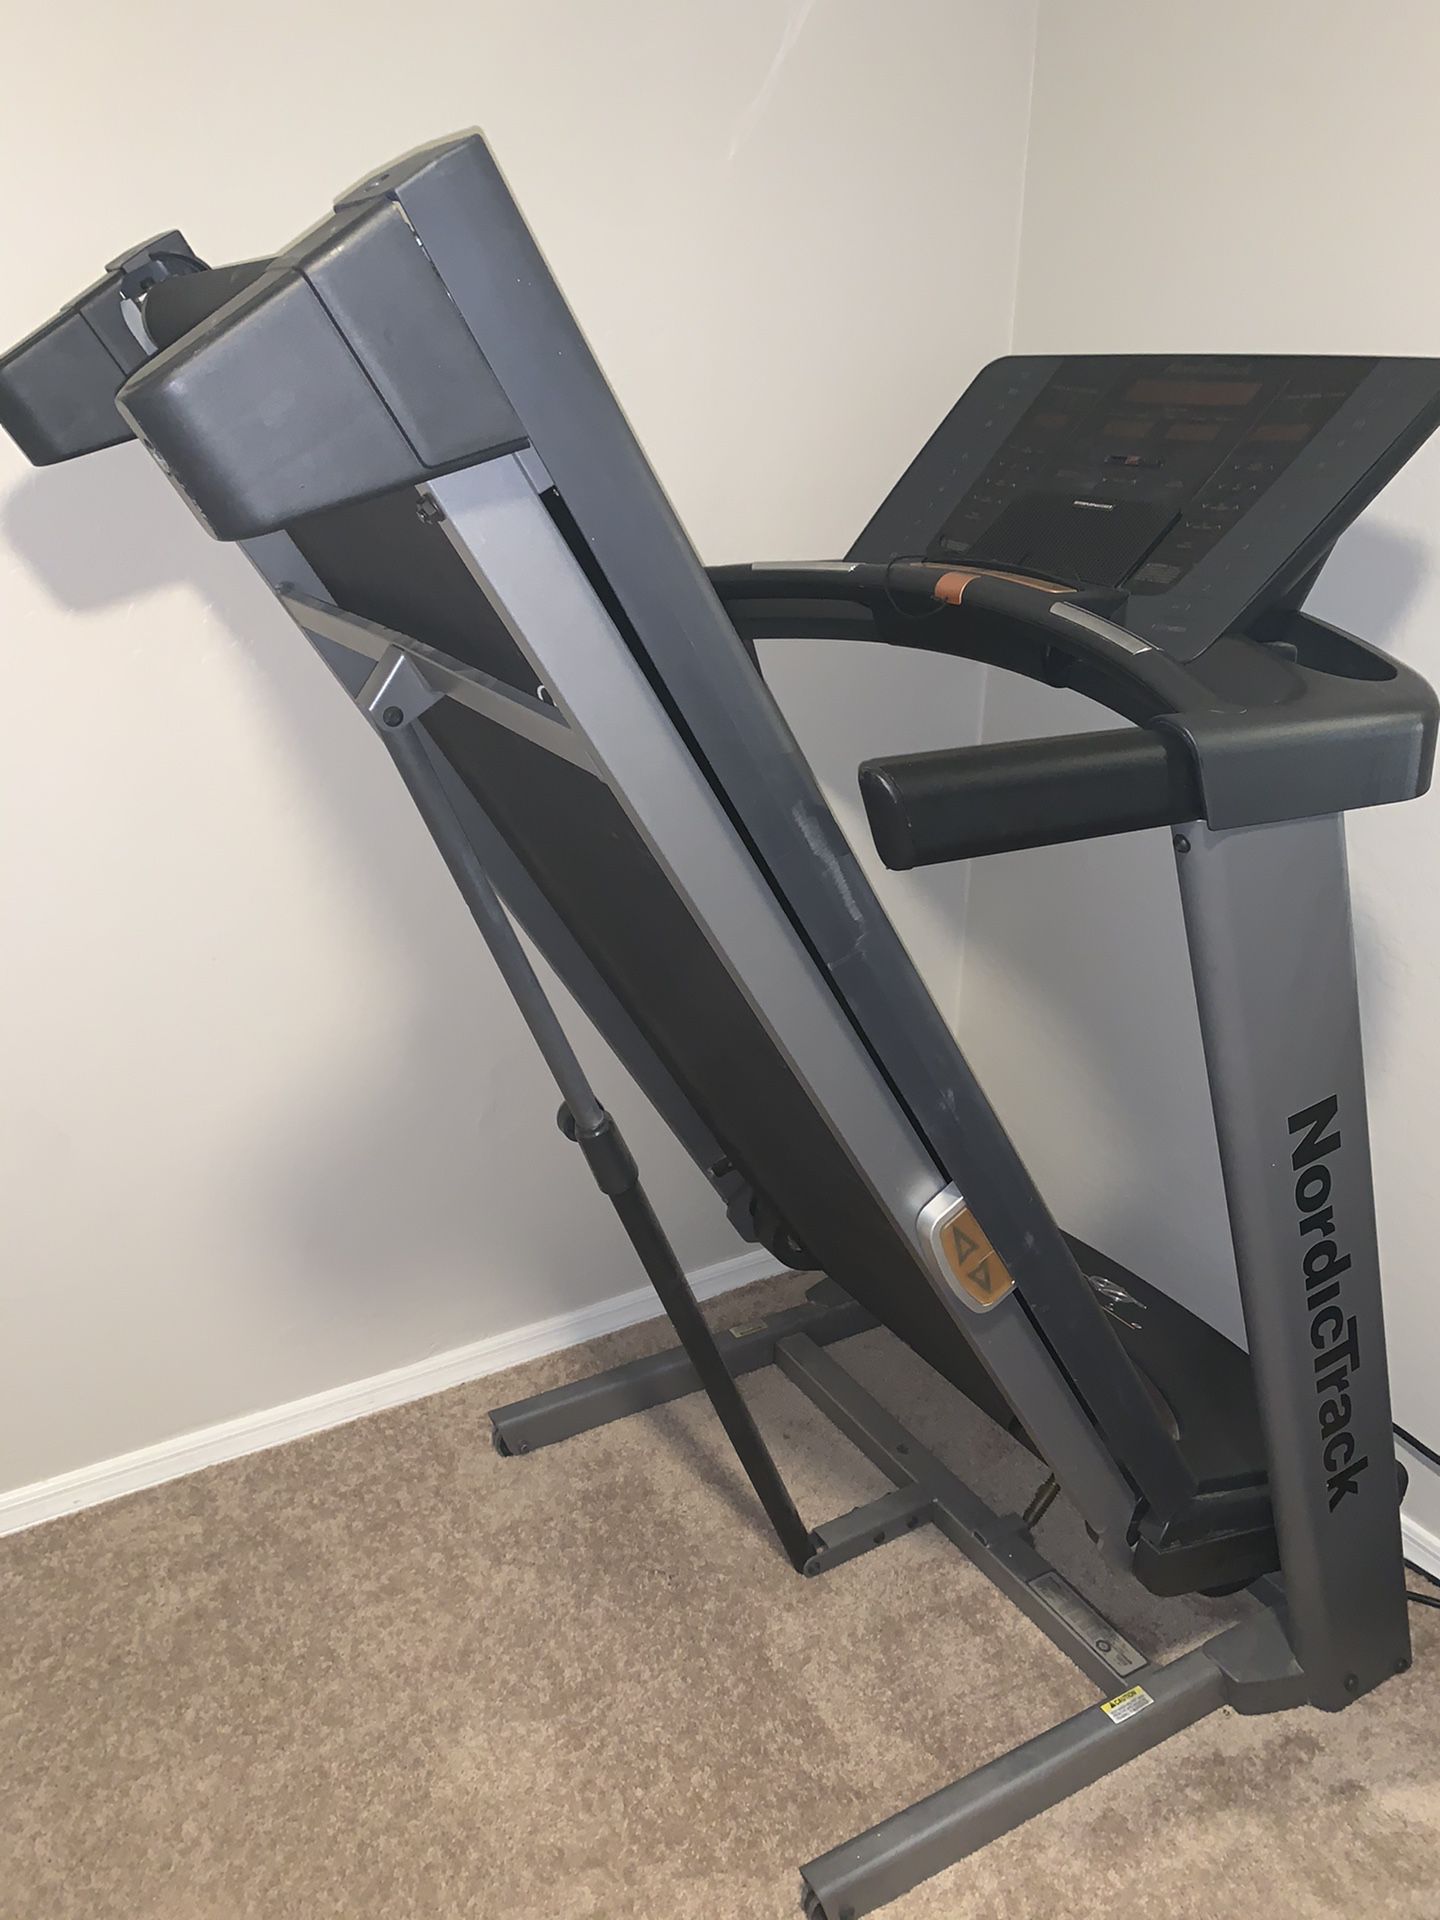 NordicTrack Treadmill $200